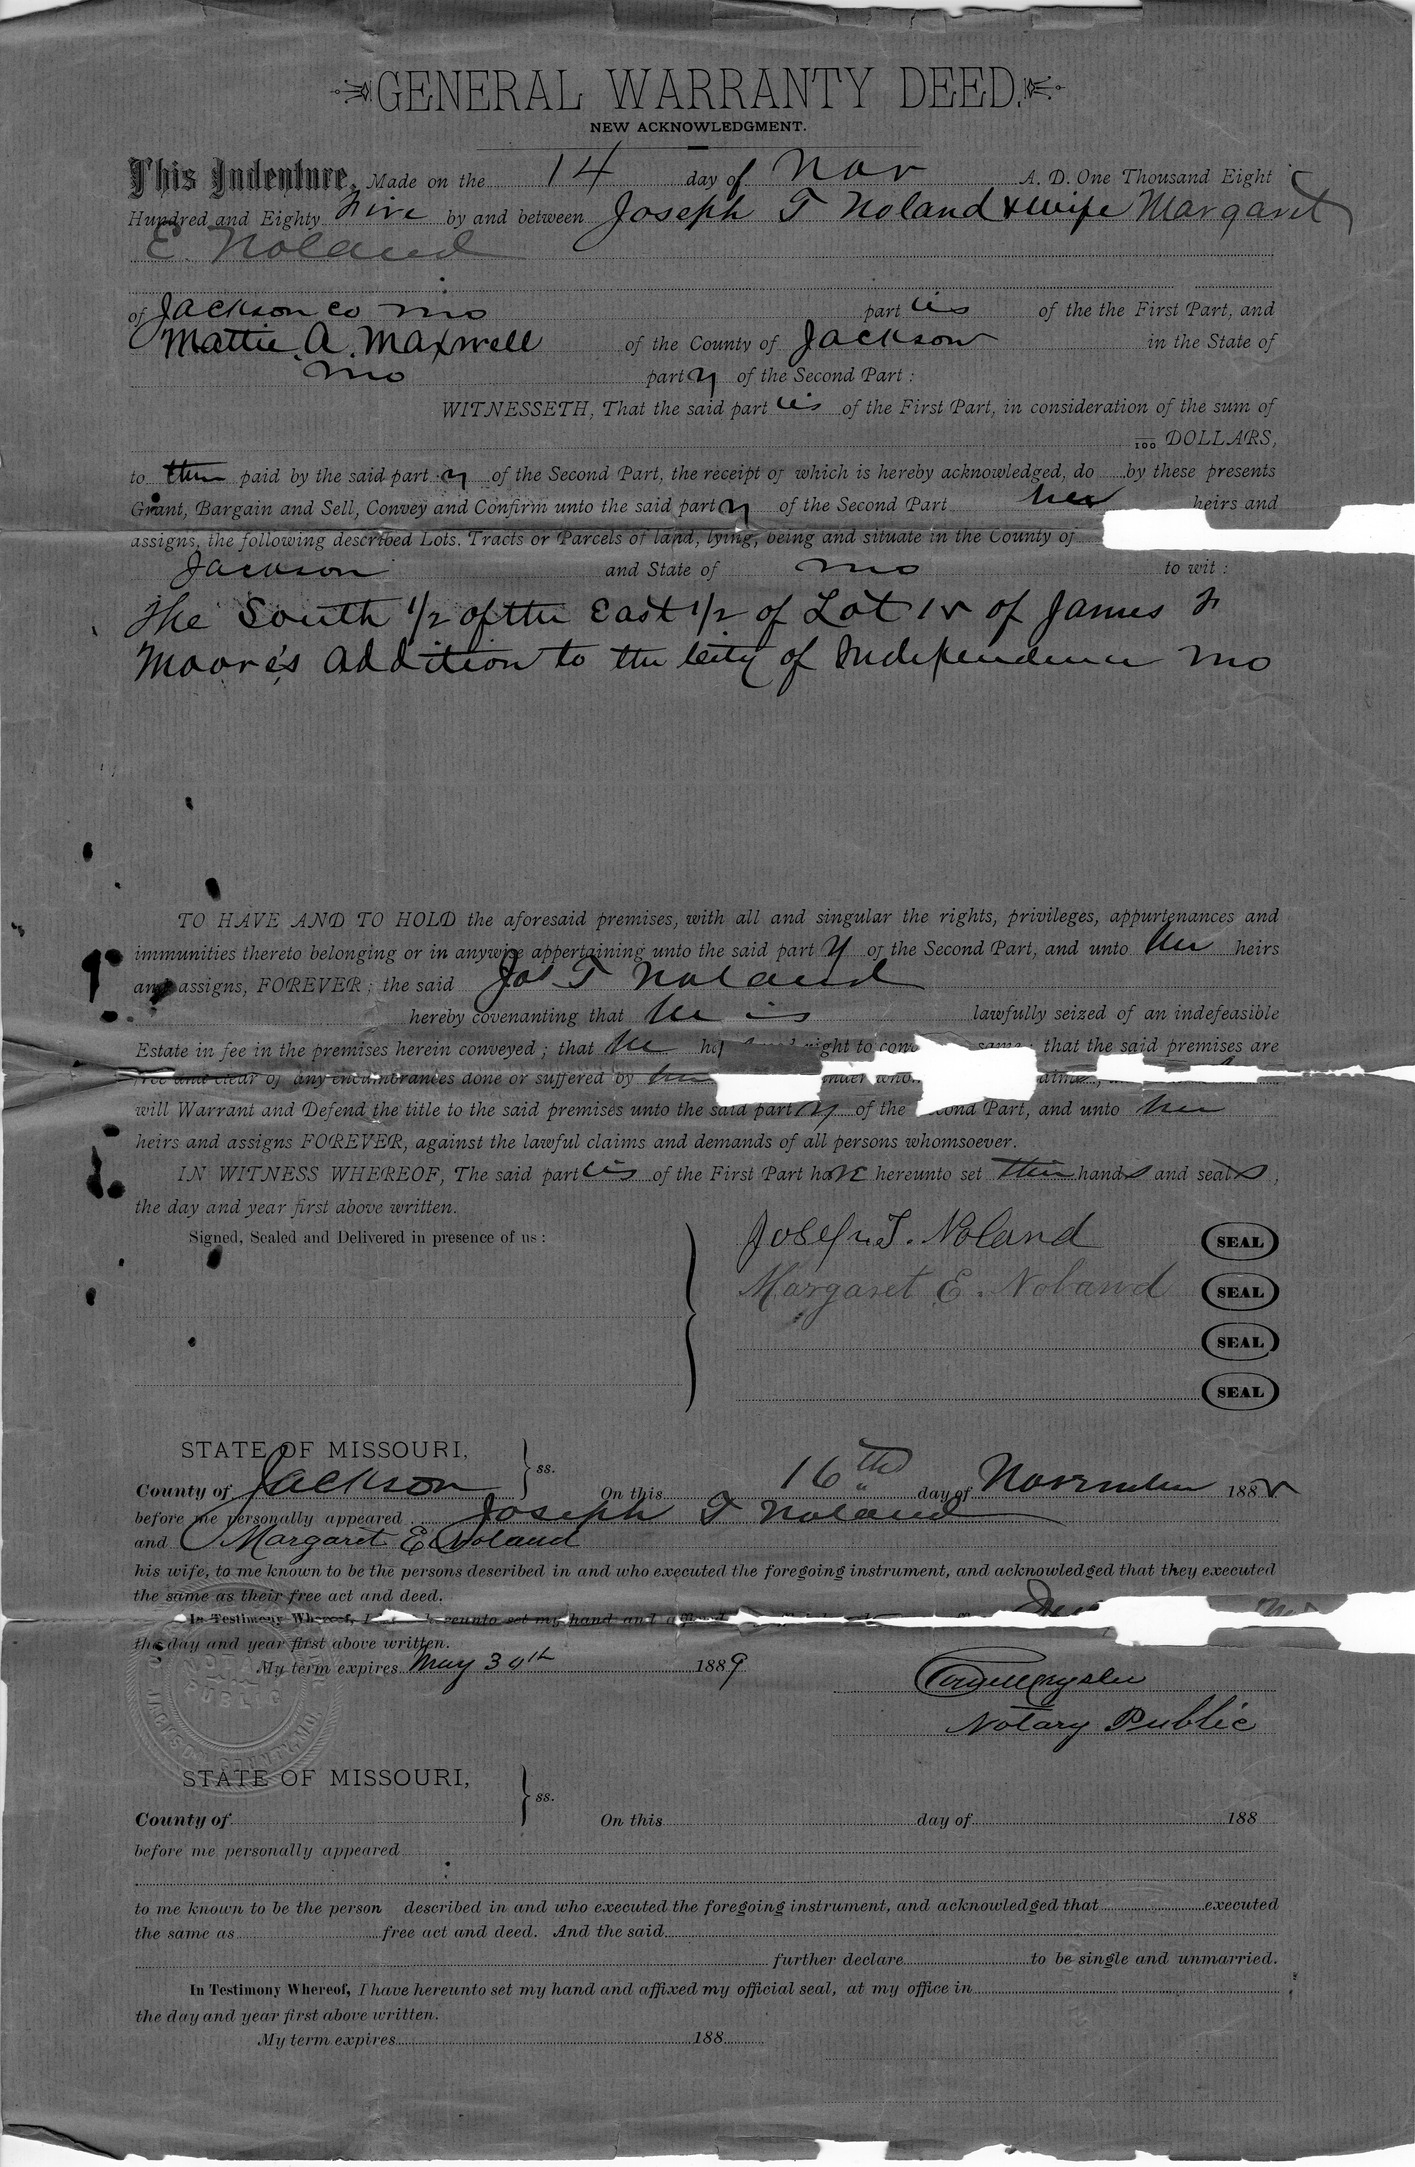 General Warranty Deed from Joseph T. Noland and Margaret E. Noland to Mattie A. Maxwell